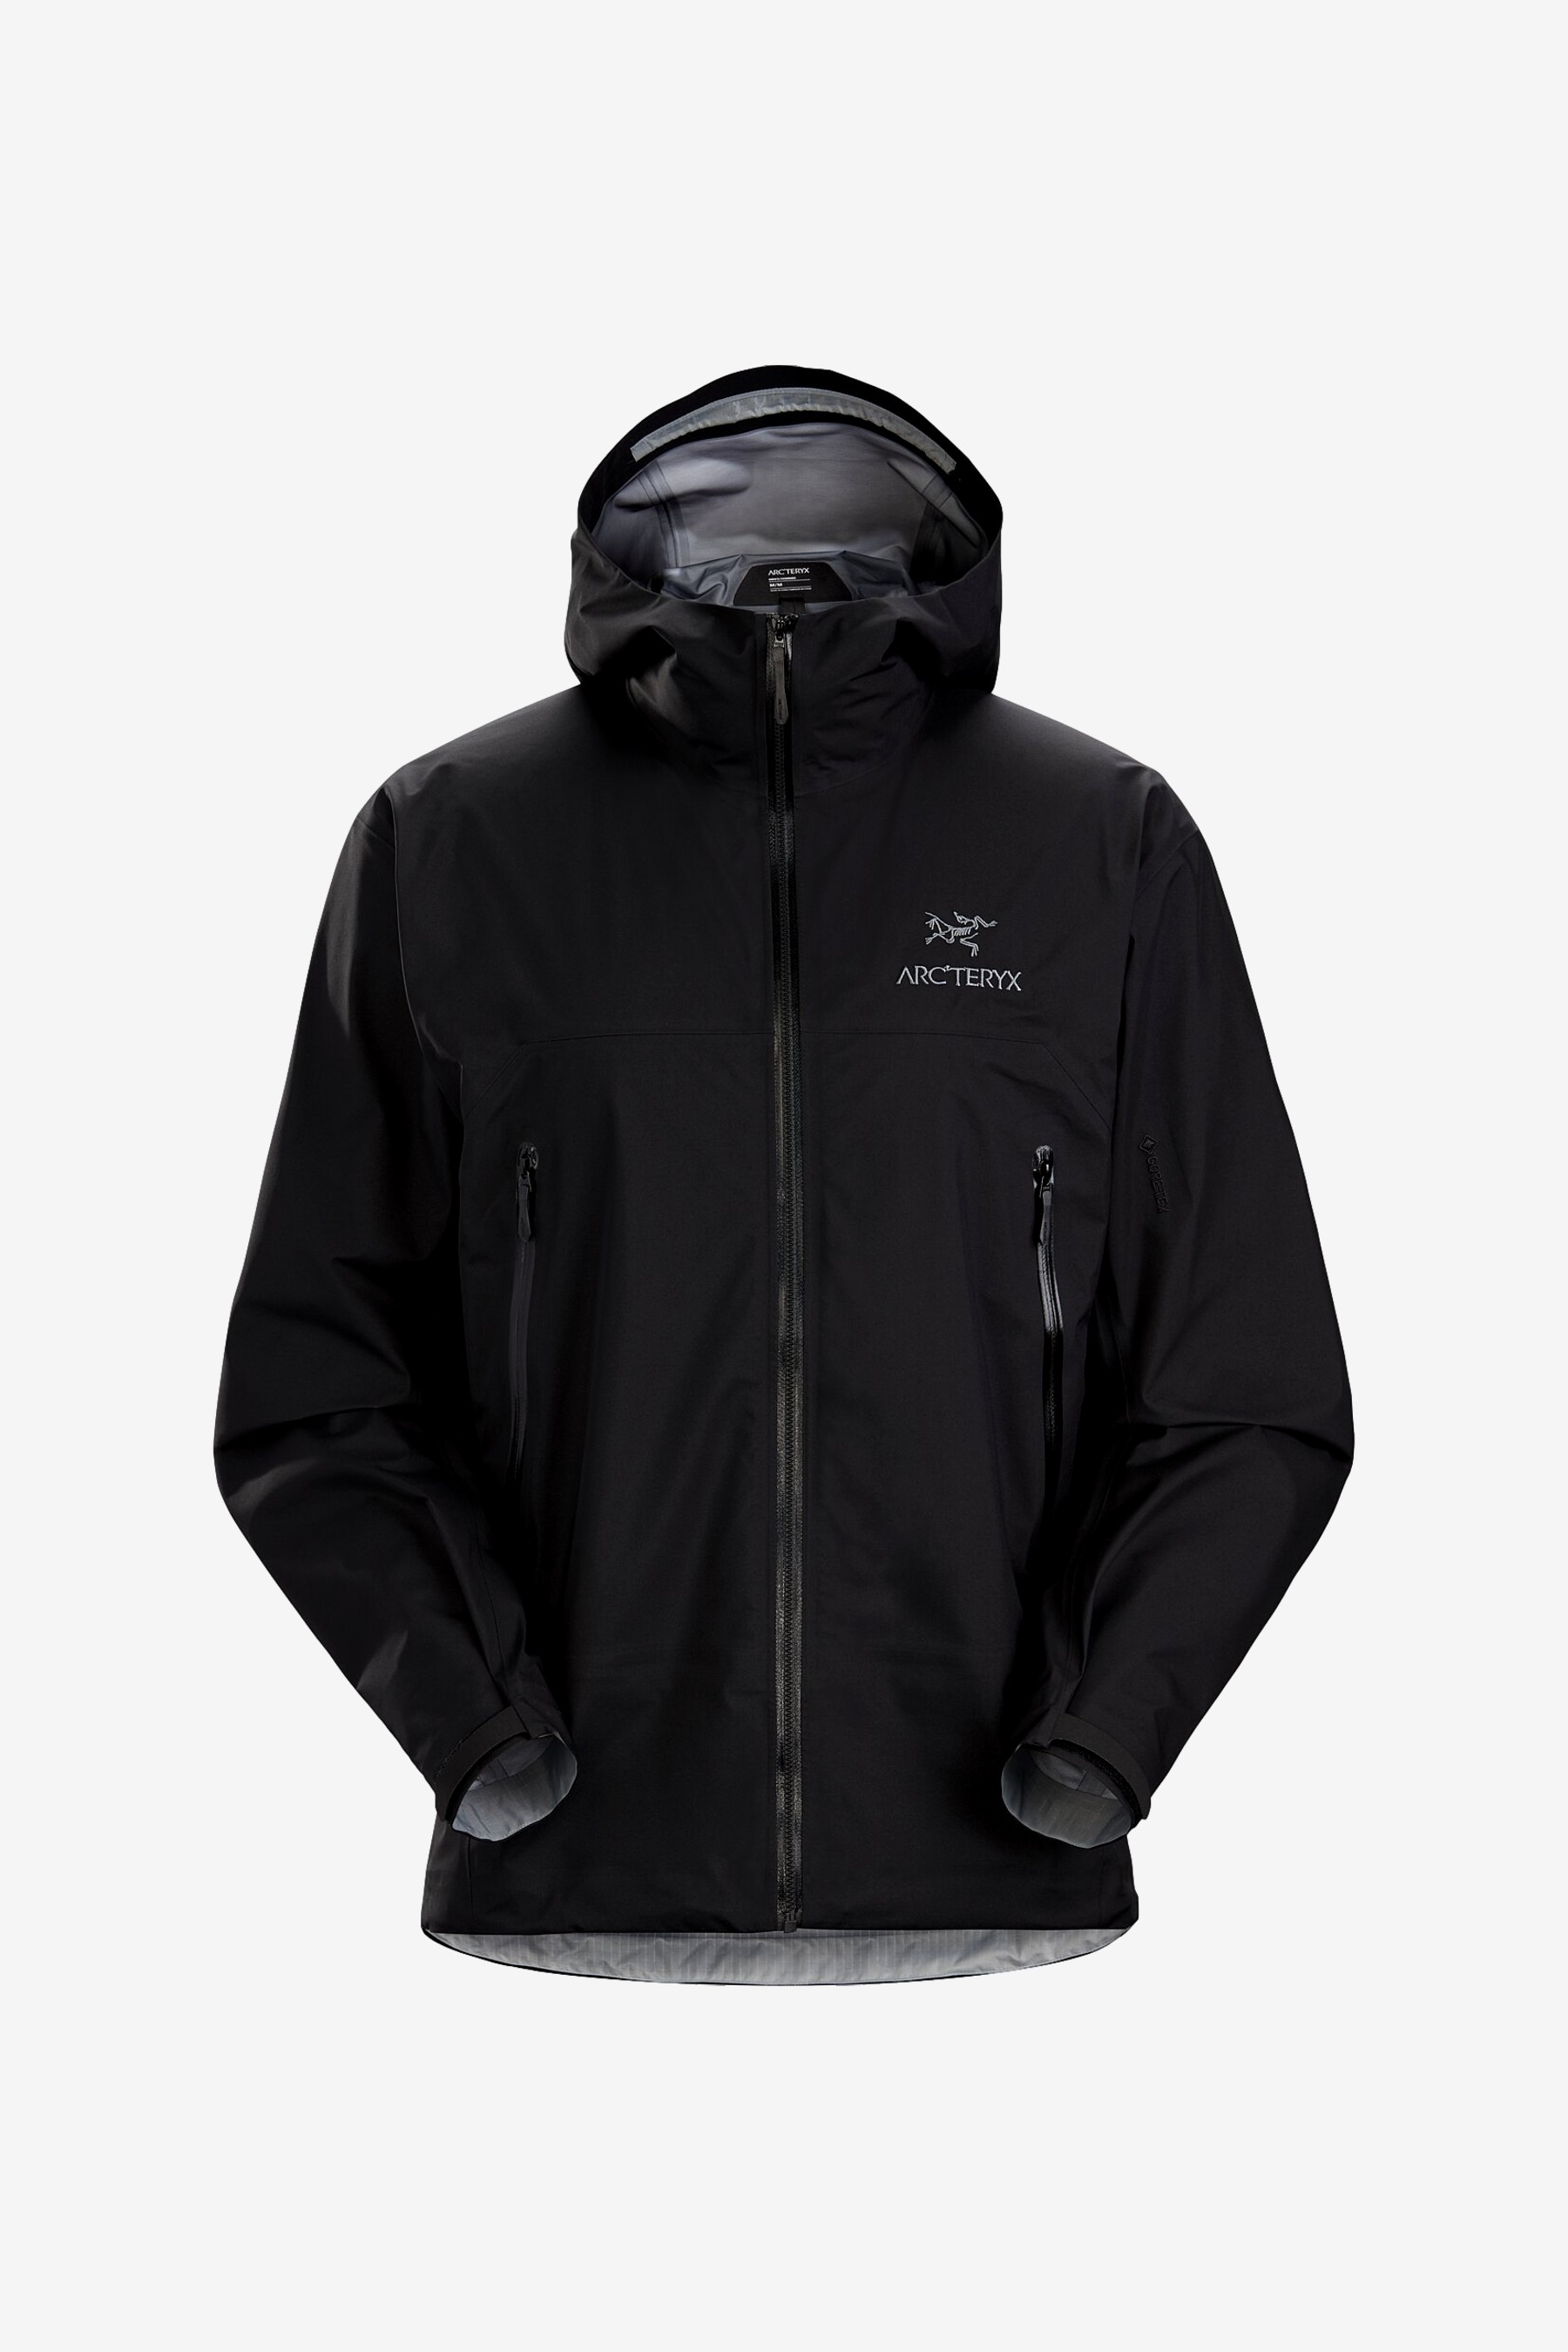 Beta Jacket in Black - Arc'teryx | Afura Store